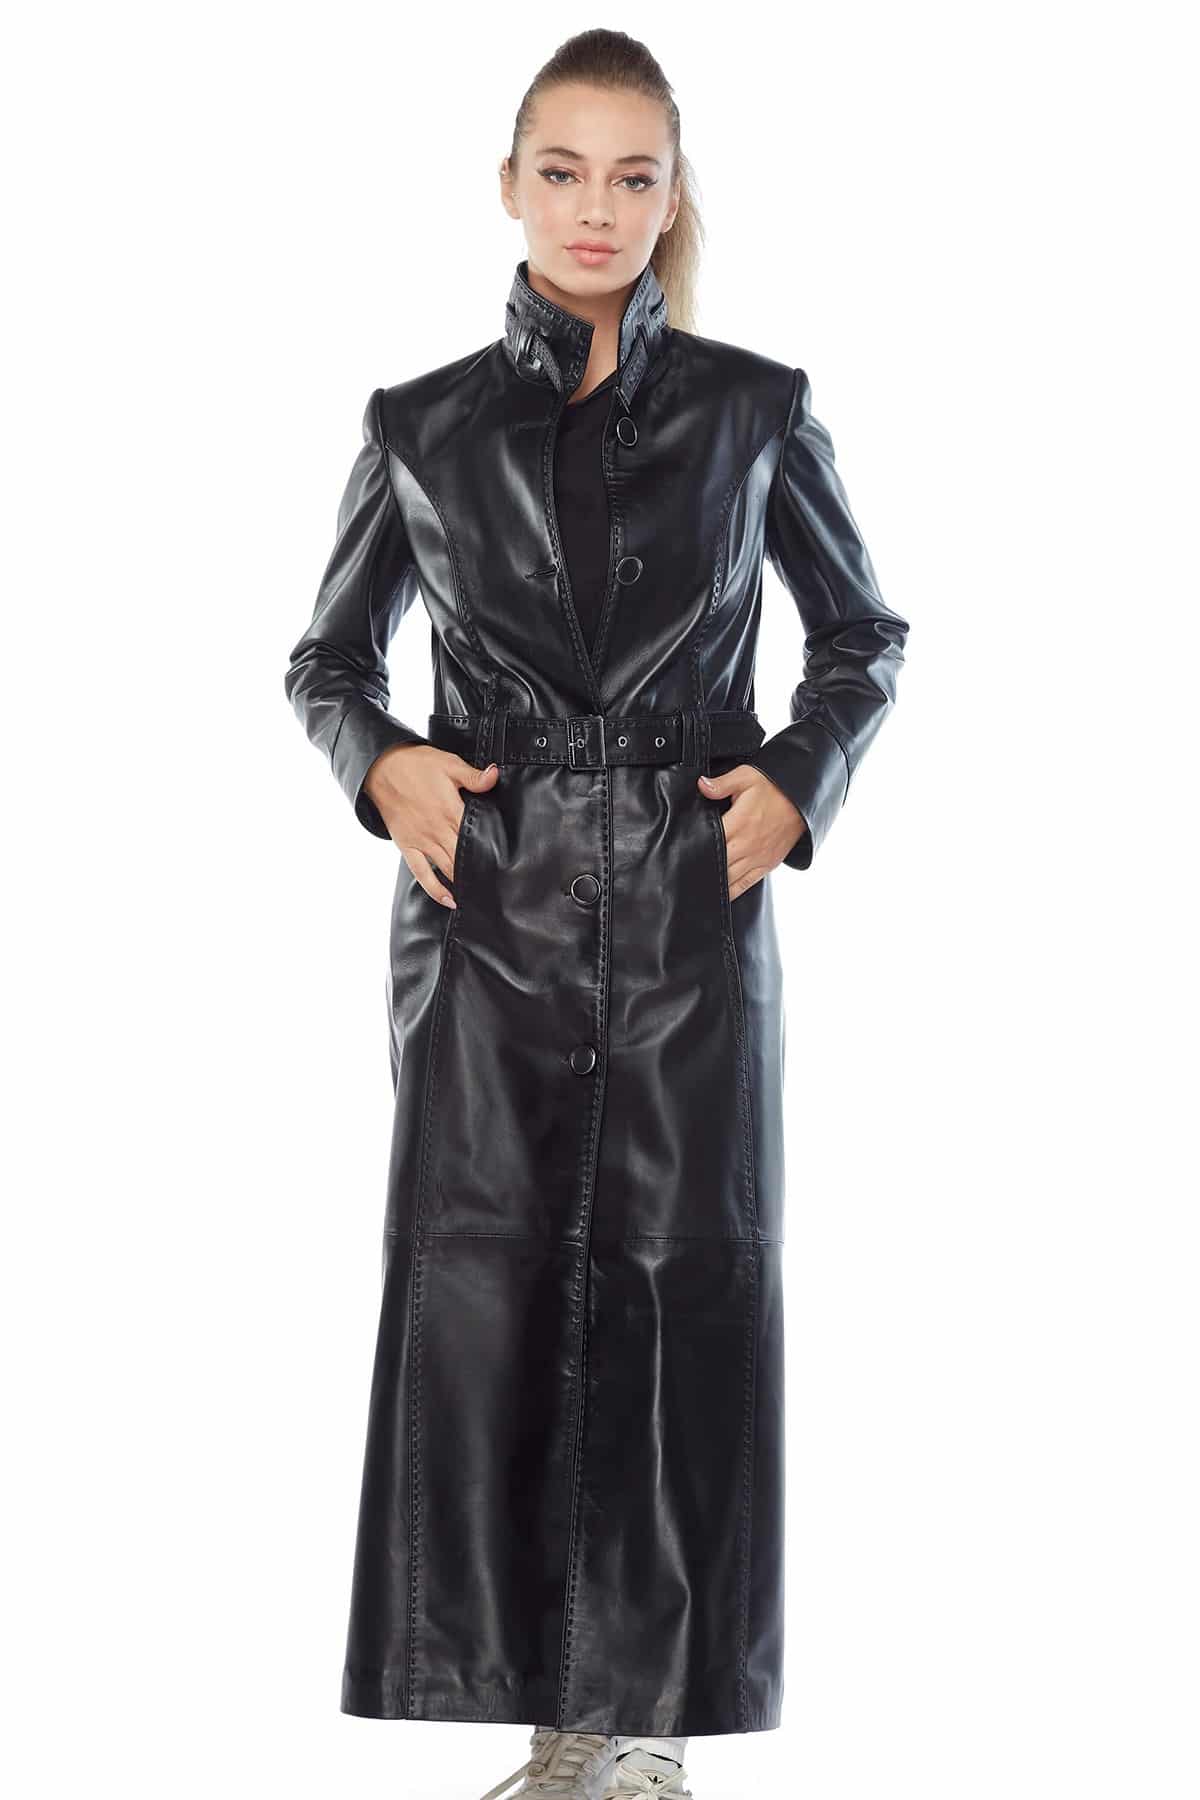 Urban Fashion Studio Blake Leather Black Trench Coat Women